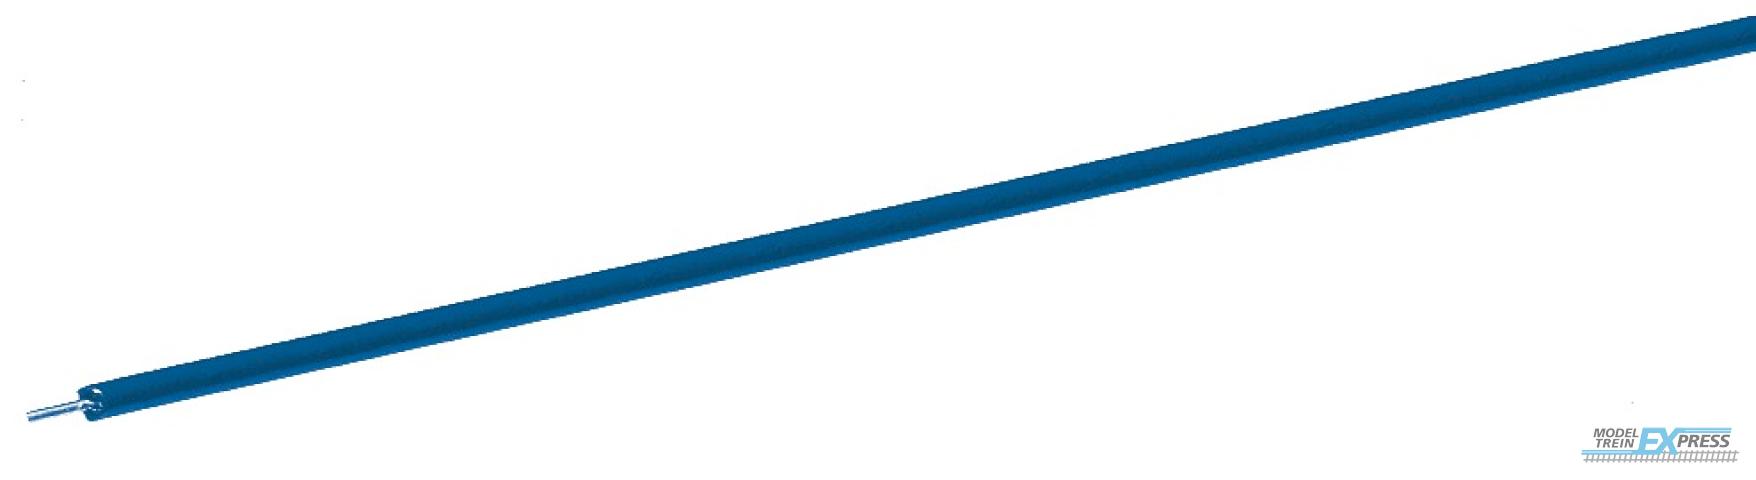 Roco 10636 Drahtrolle blau 10m